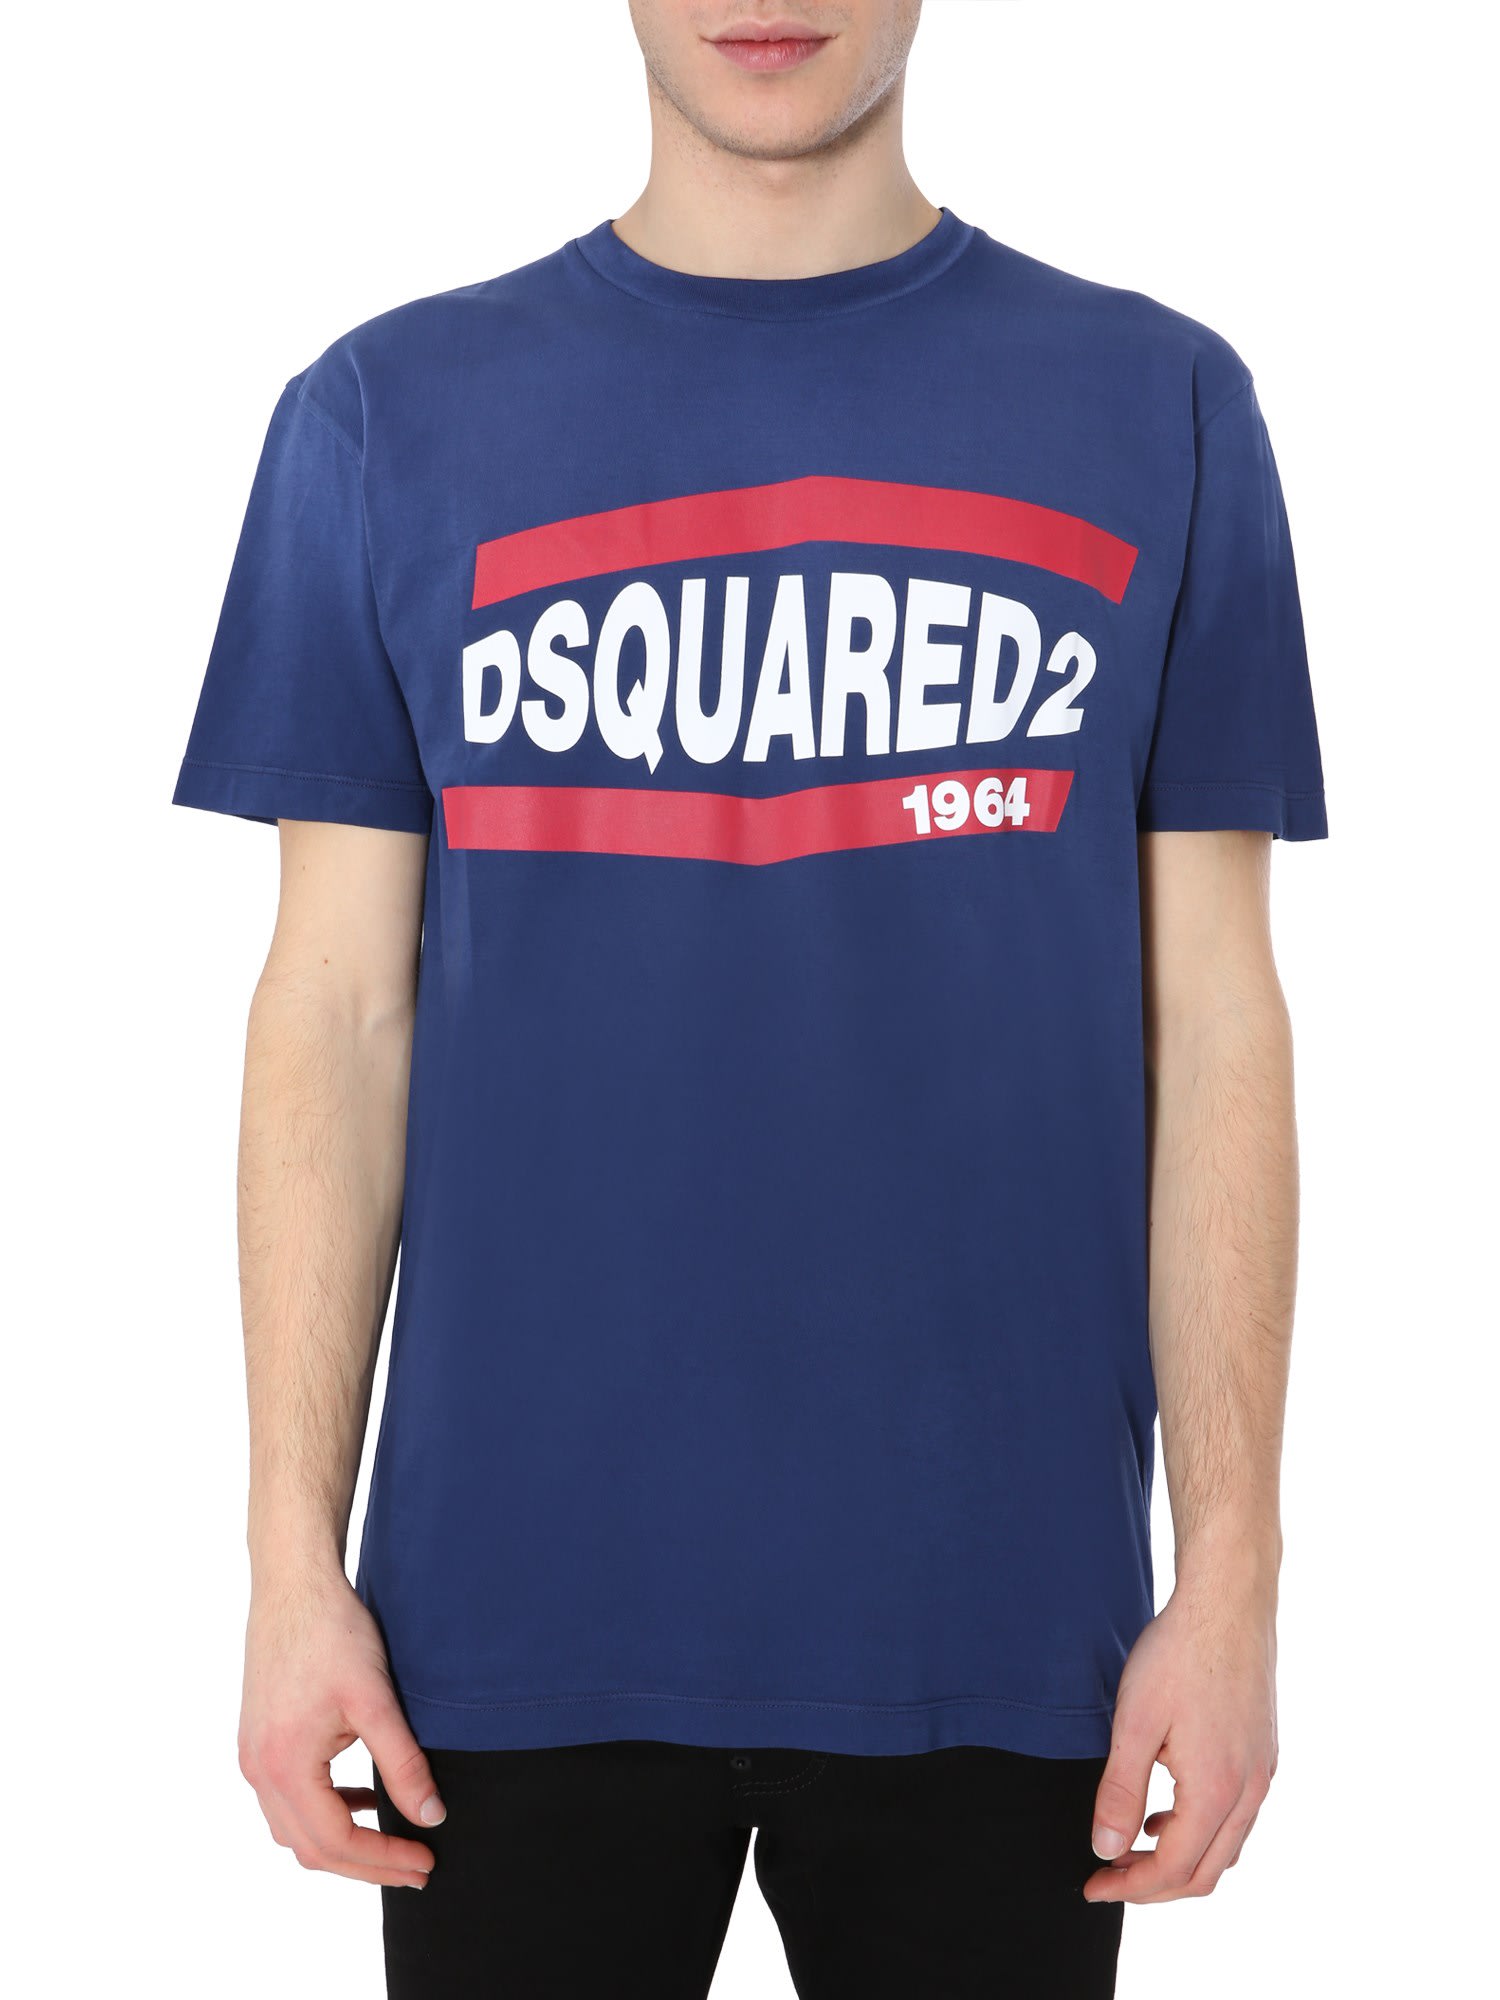 dsquared2 round neck shirt